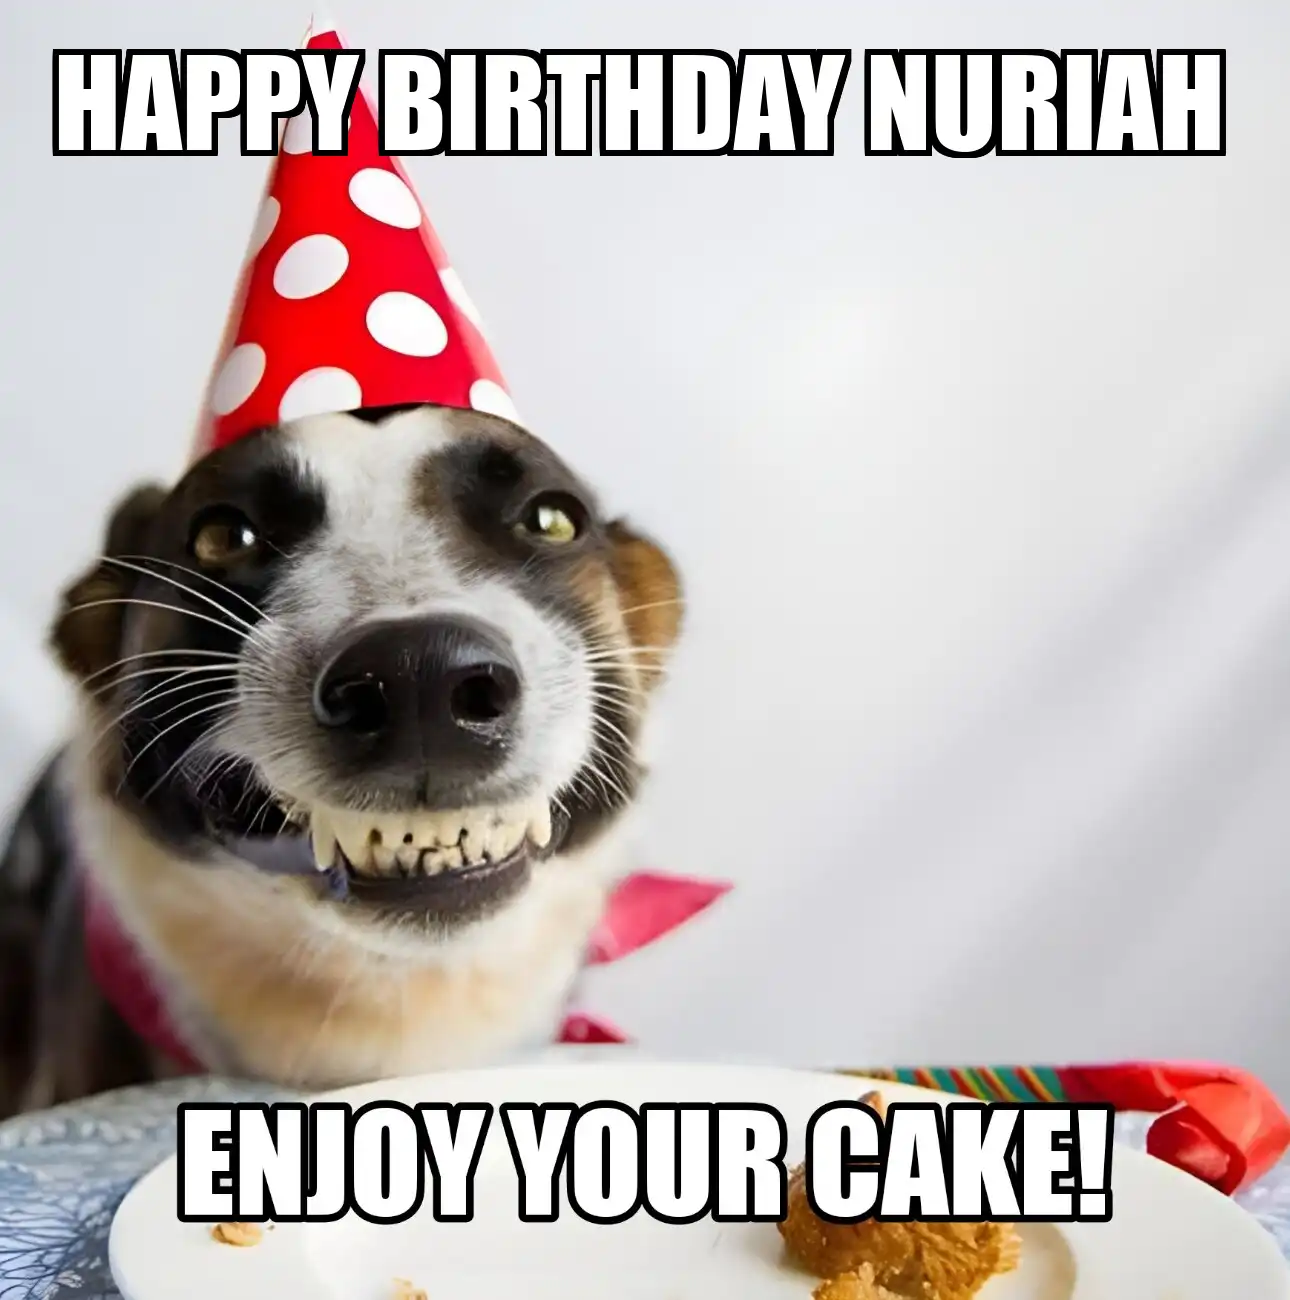 Happy Birthday Nuriah Enjoy Your Cake Dog Meme